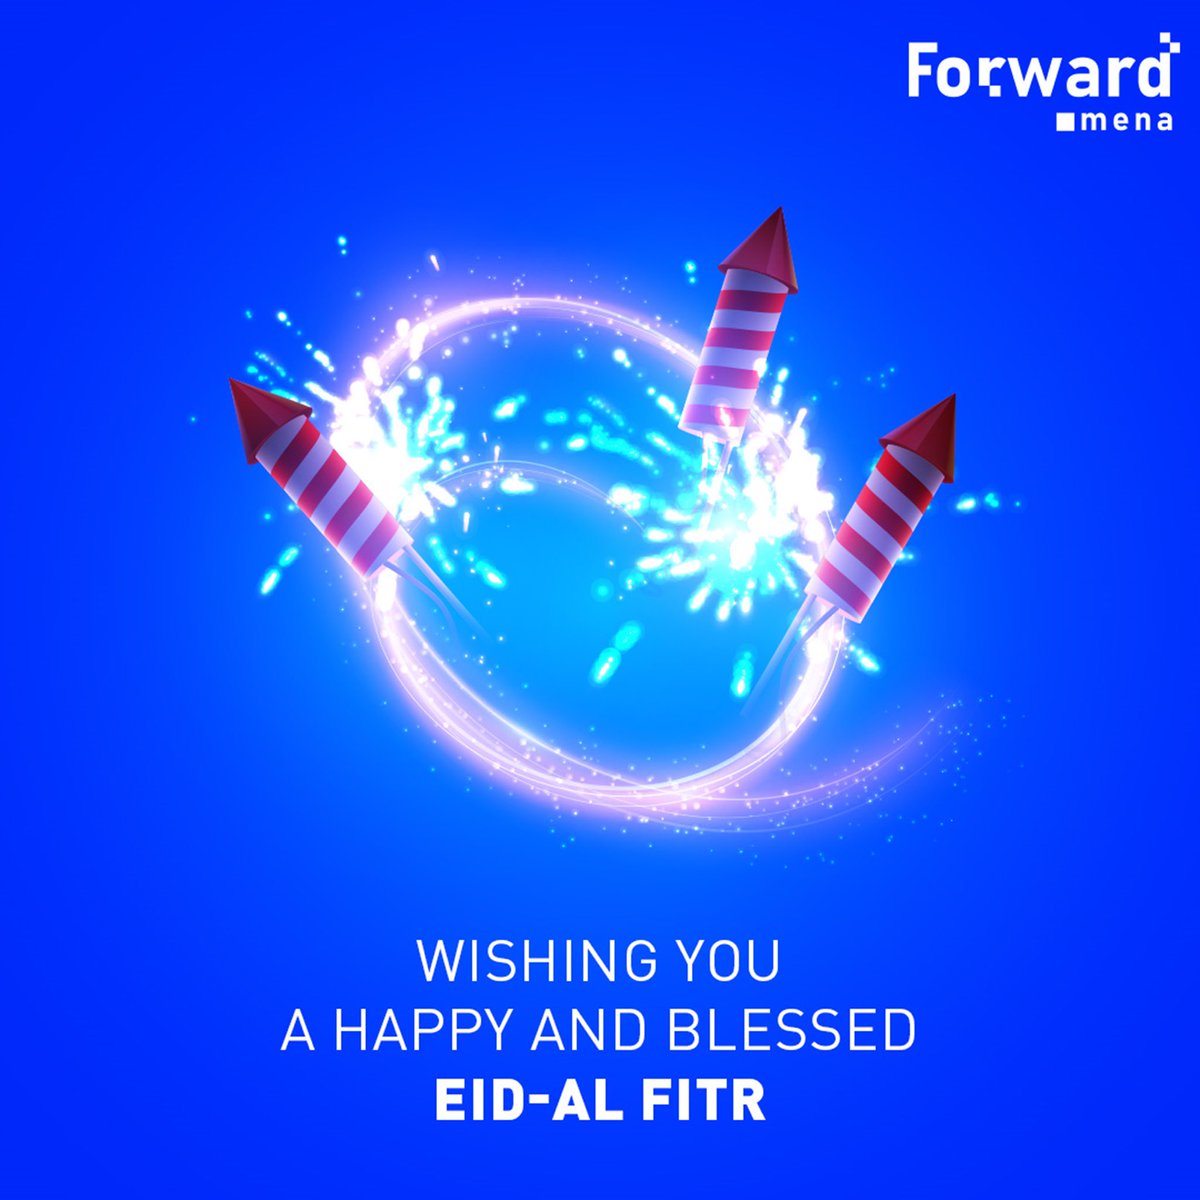 Wishing you a happy and blessed Eid al-Fitr! 🚀✨ 

May your celebrations be bright and joyous.

#EidMubarak #ForwardMena #Celebration